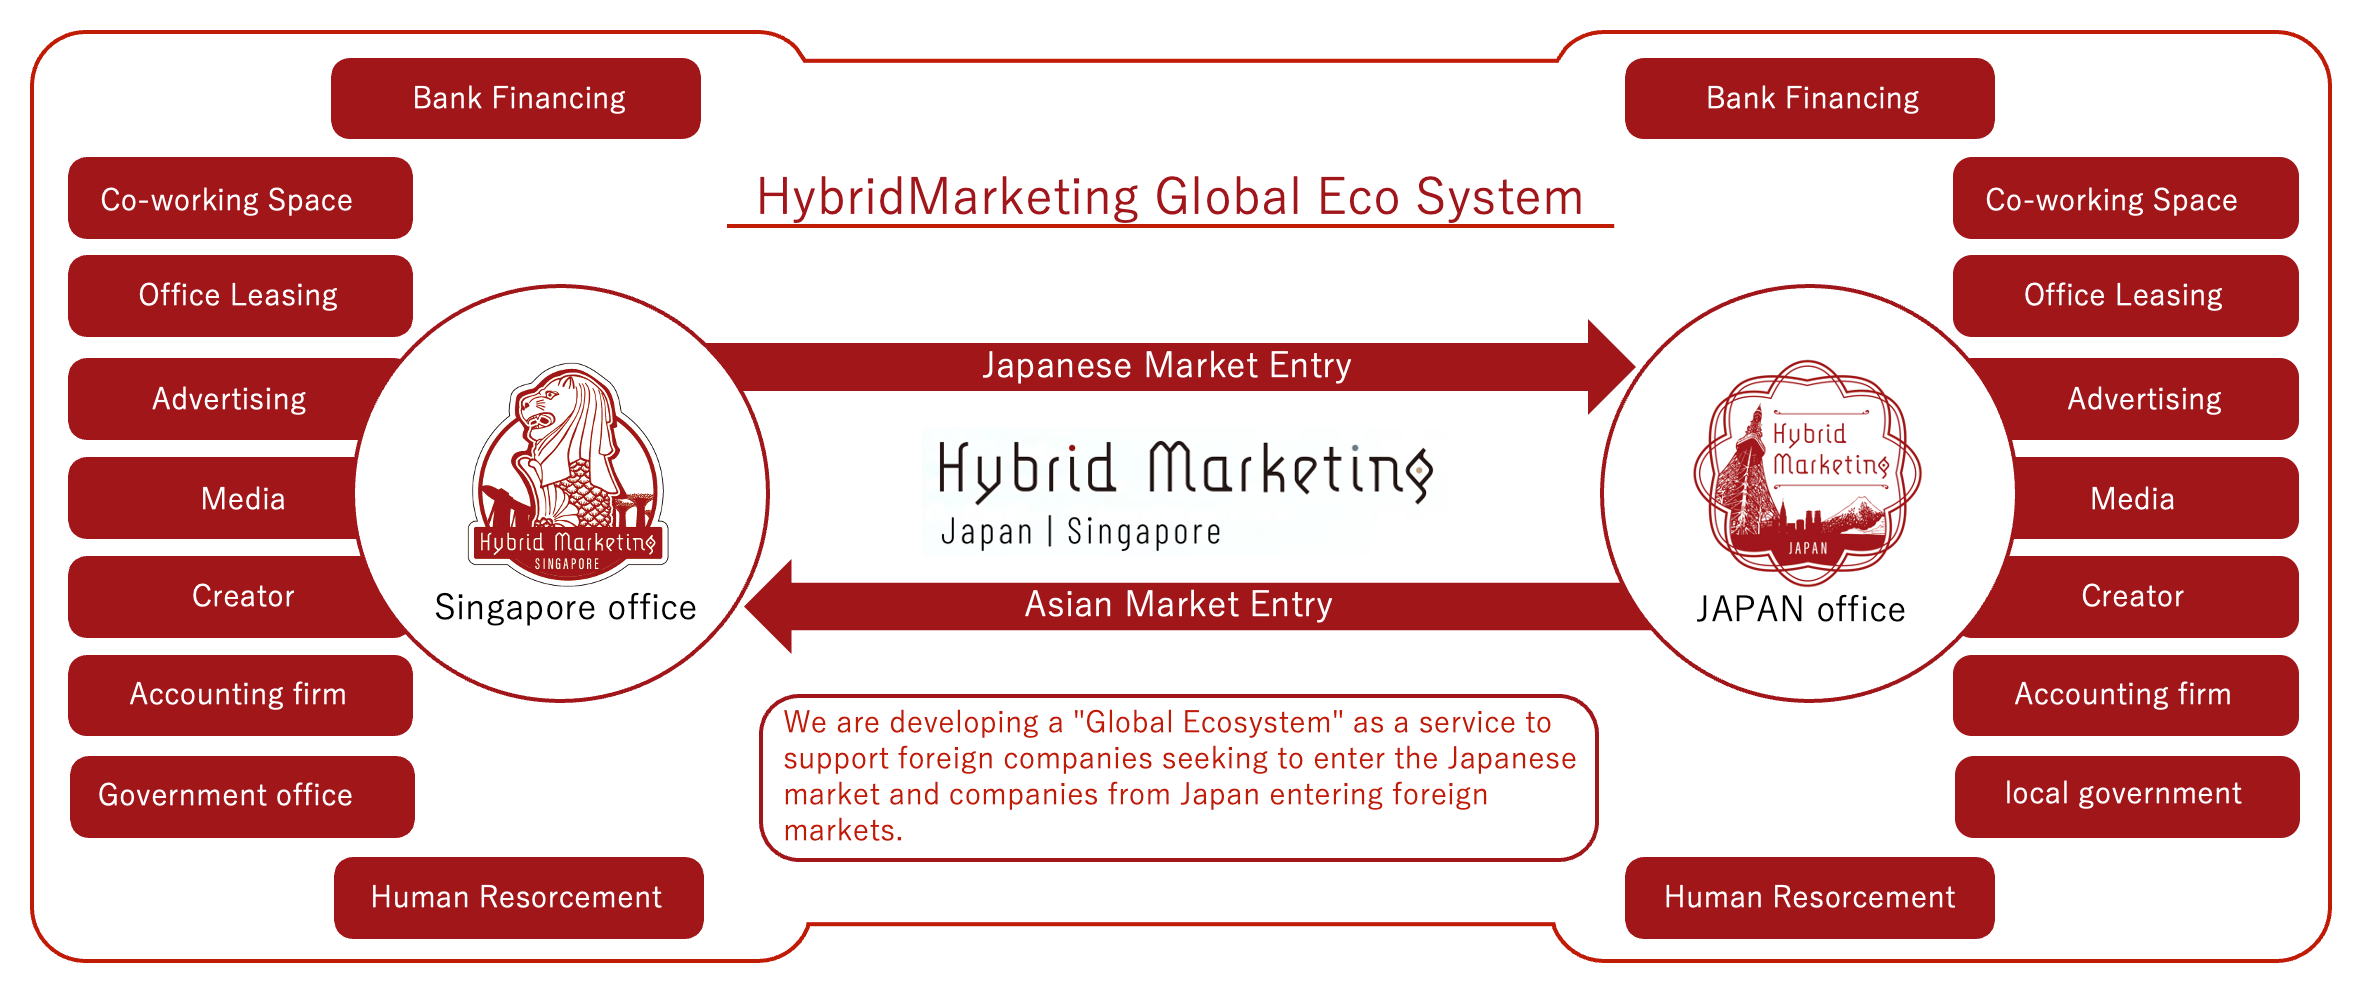 Hybridmarketing global eco system